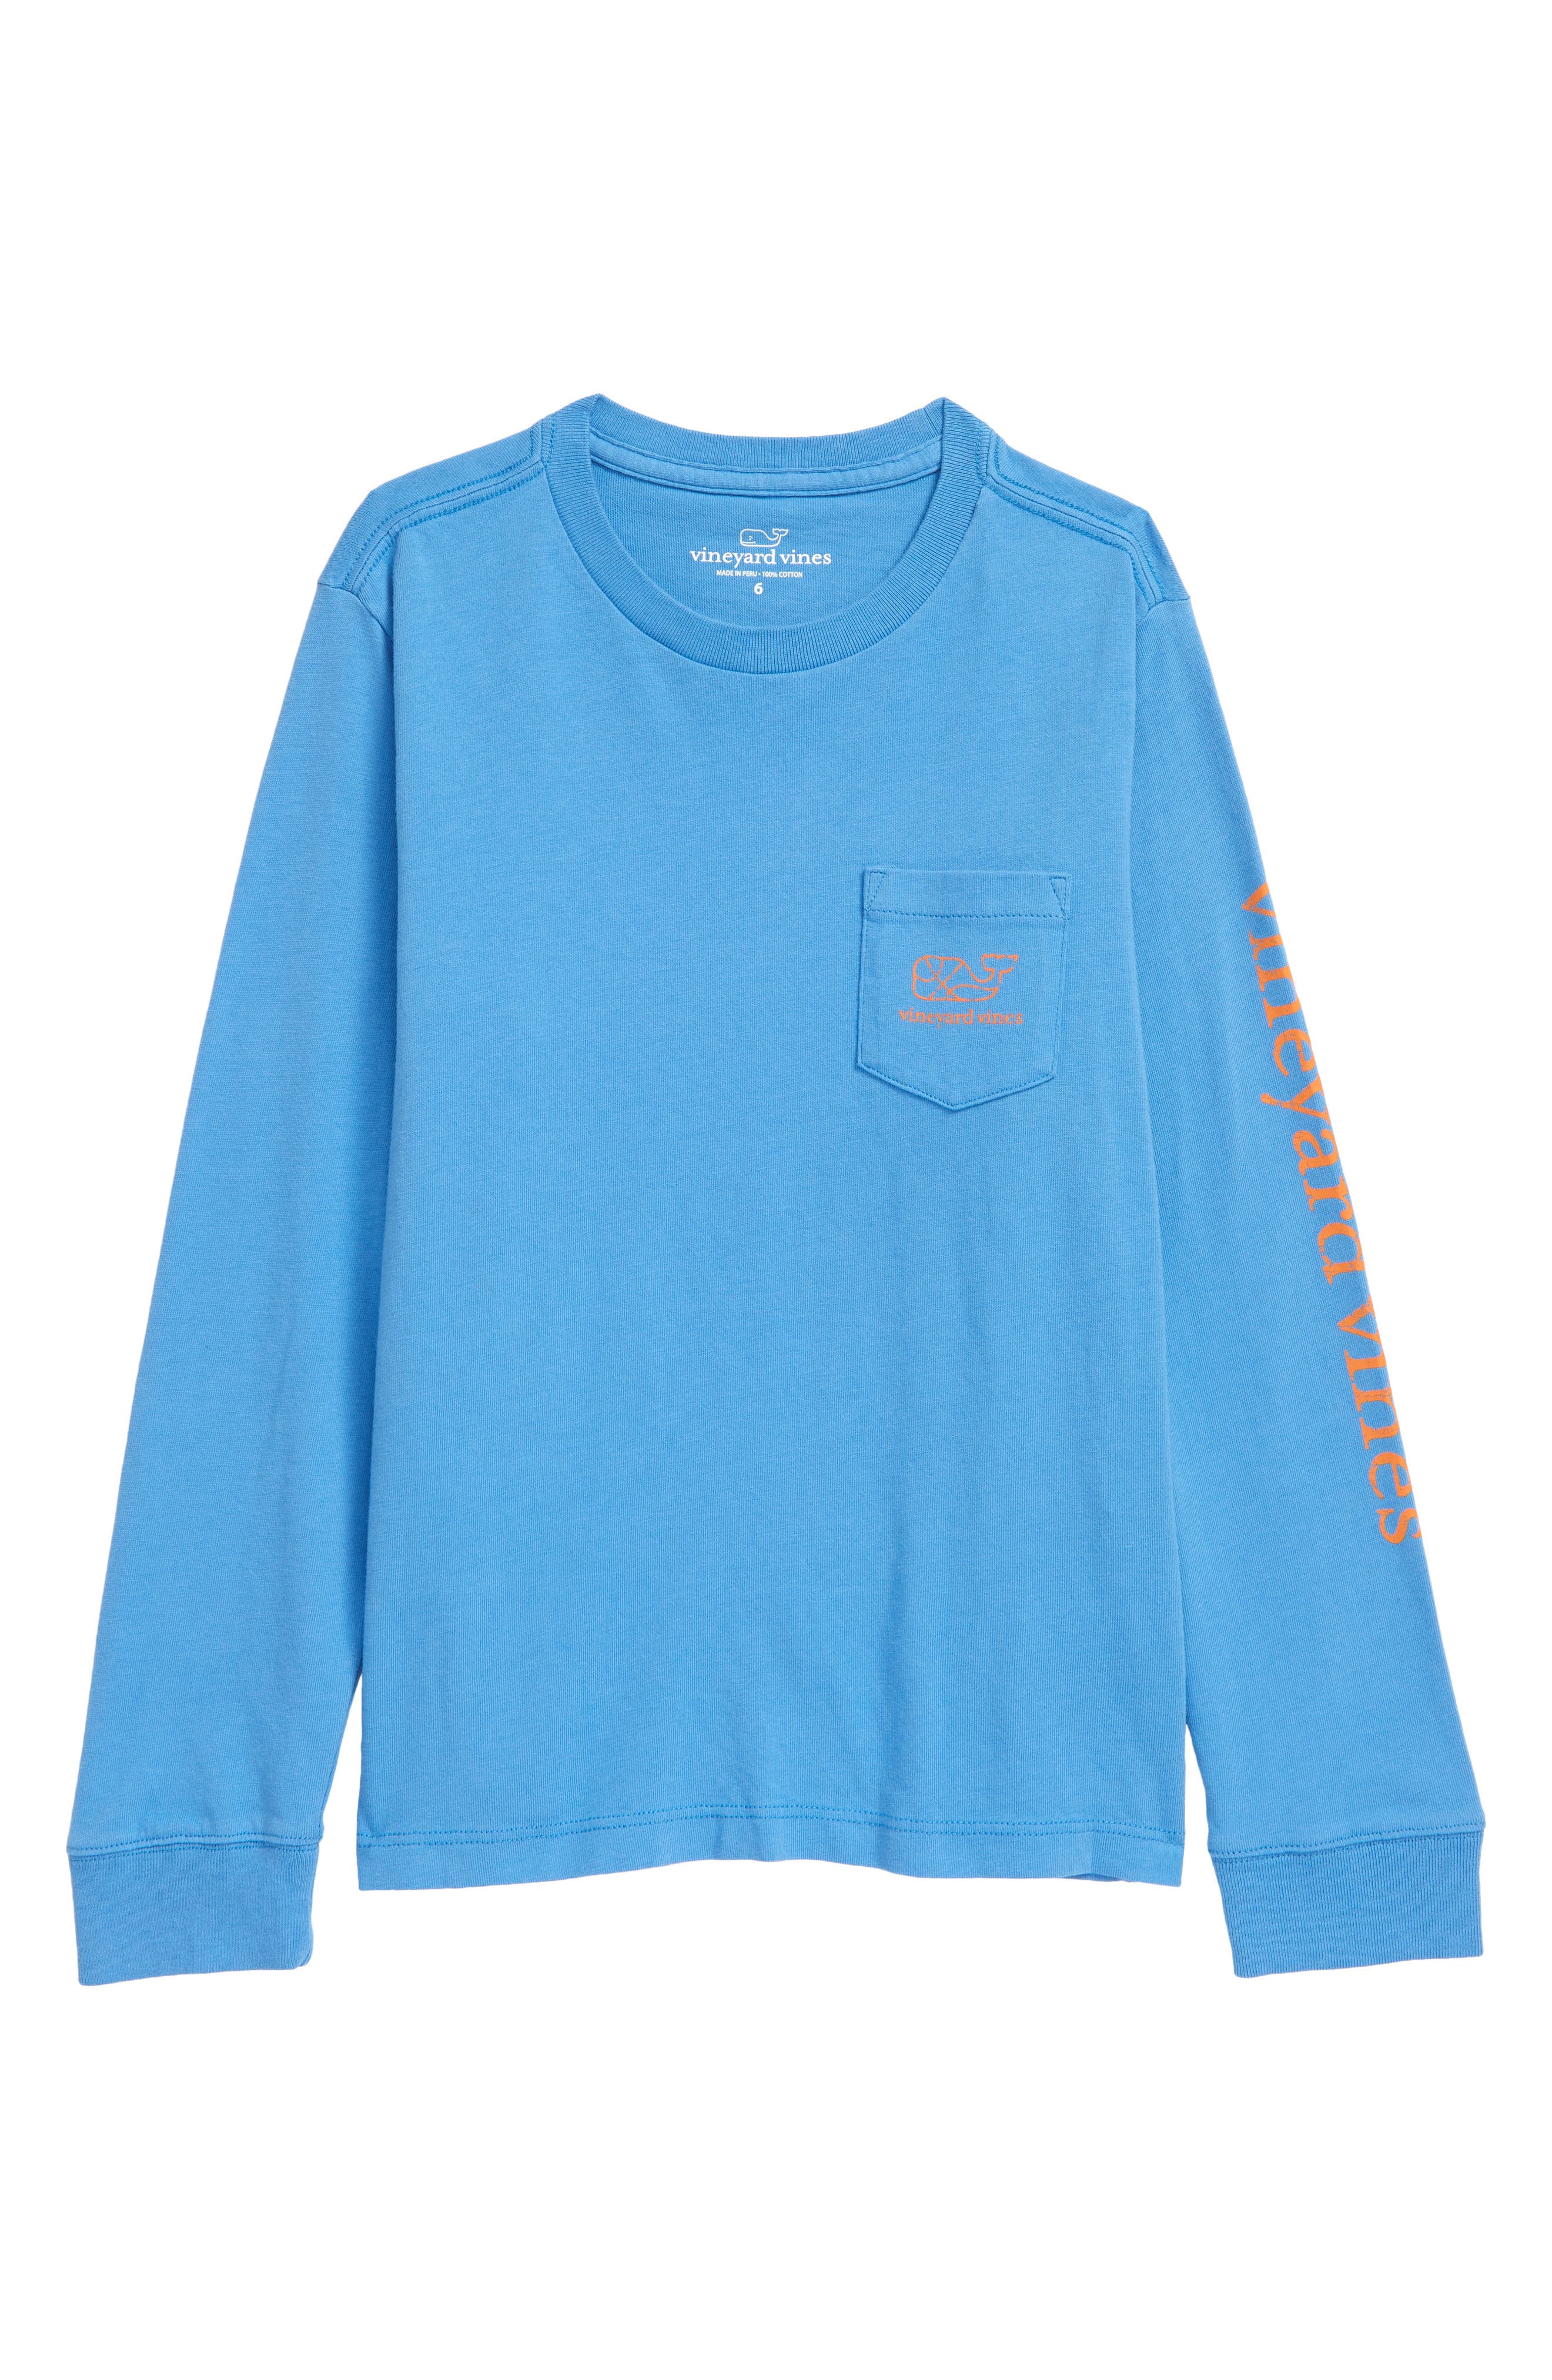 Vineyard Vines Youth Boys SS Football Field Logo Box Pocket Tee Shirt T-Shirt X-Large 18 